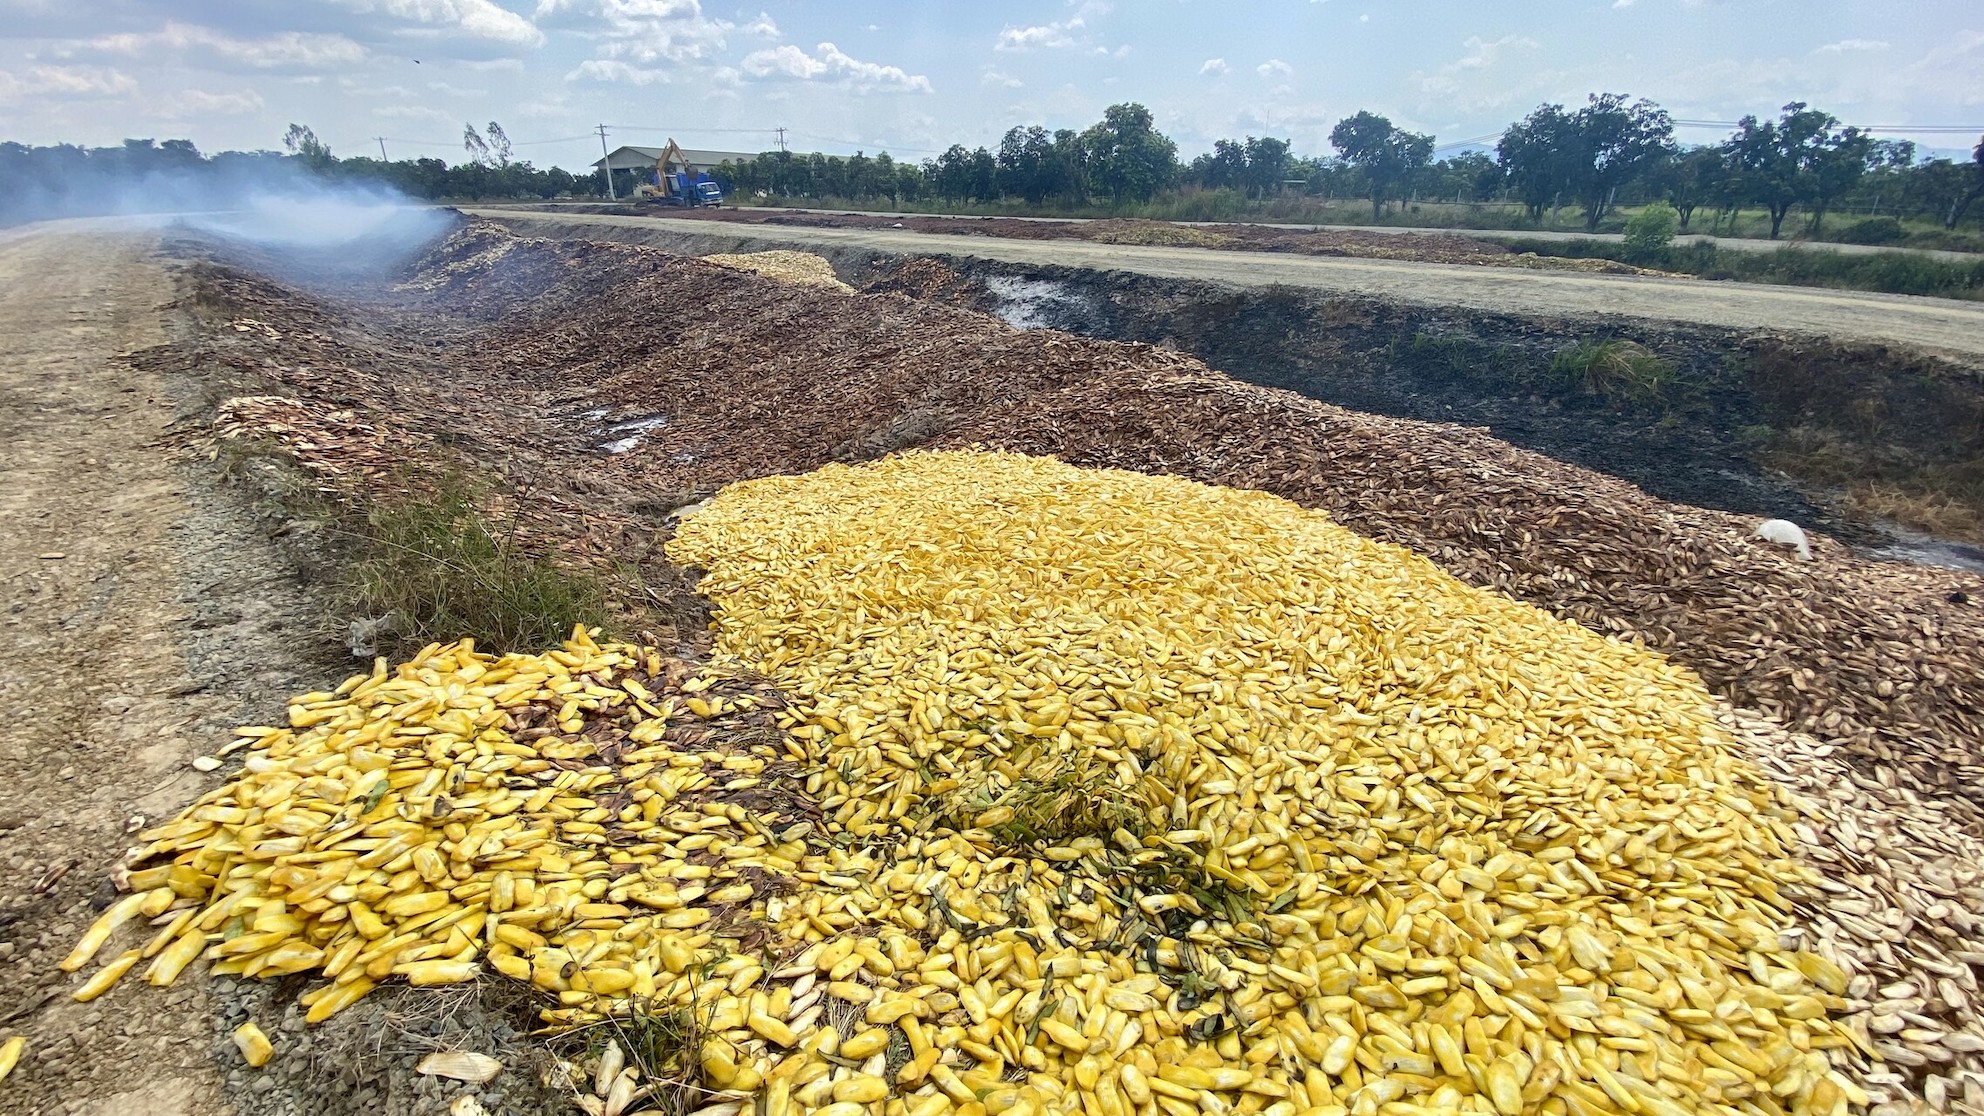 skladka odpadu tuny mangovych pecek